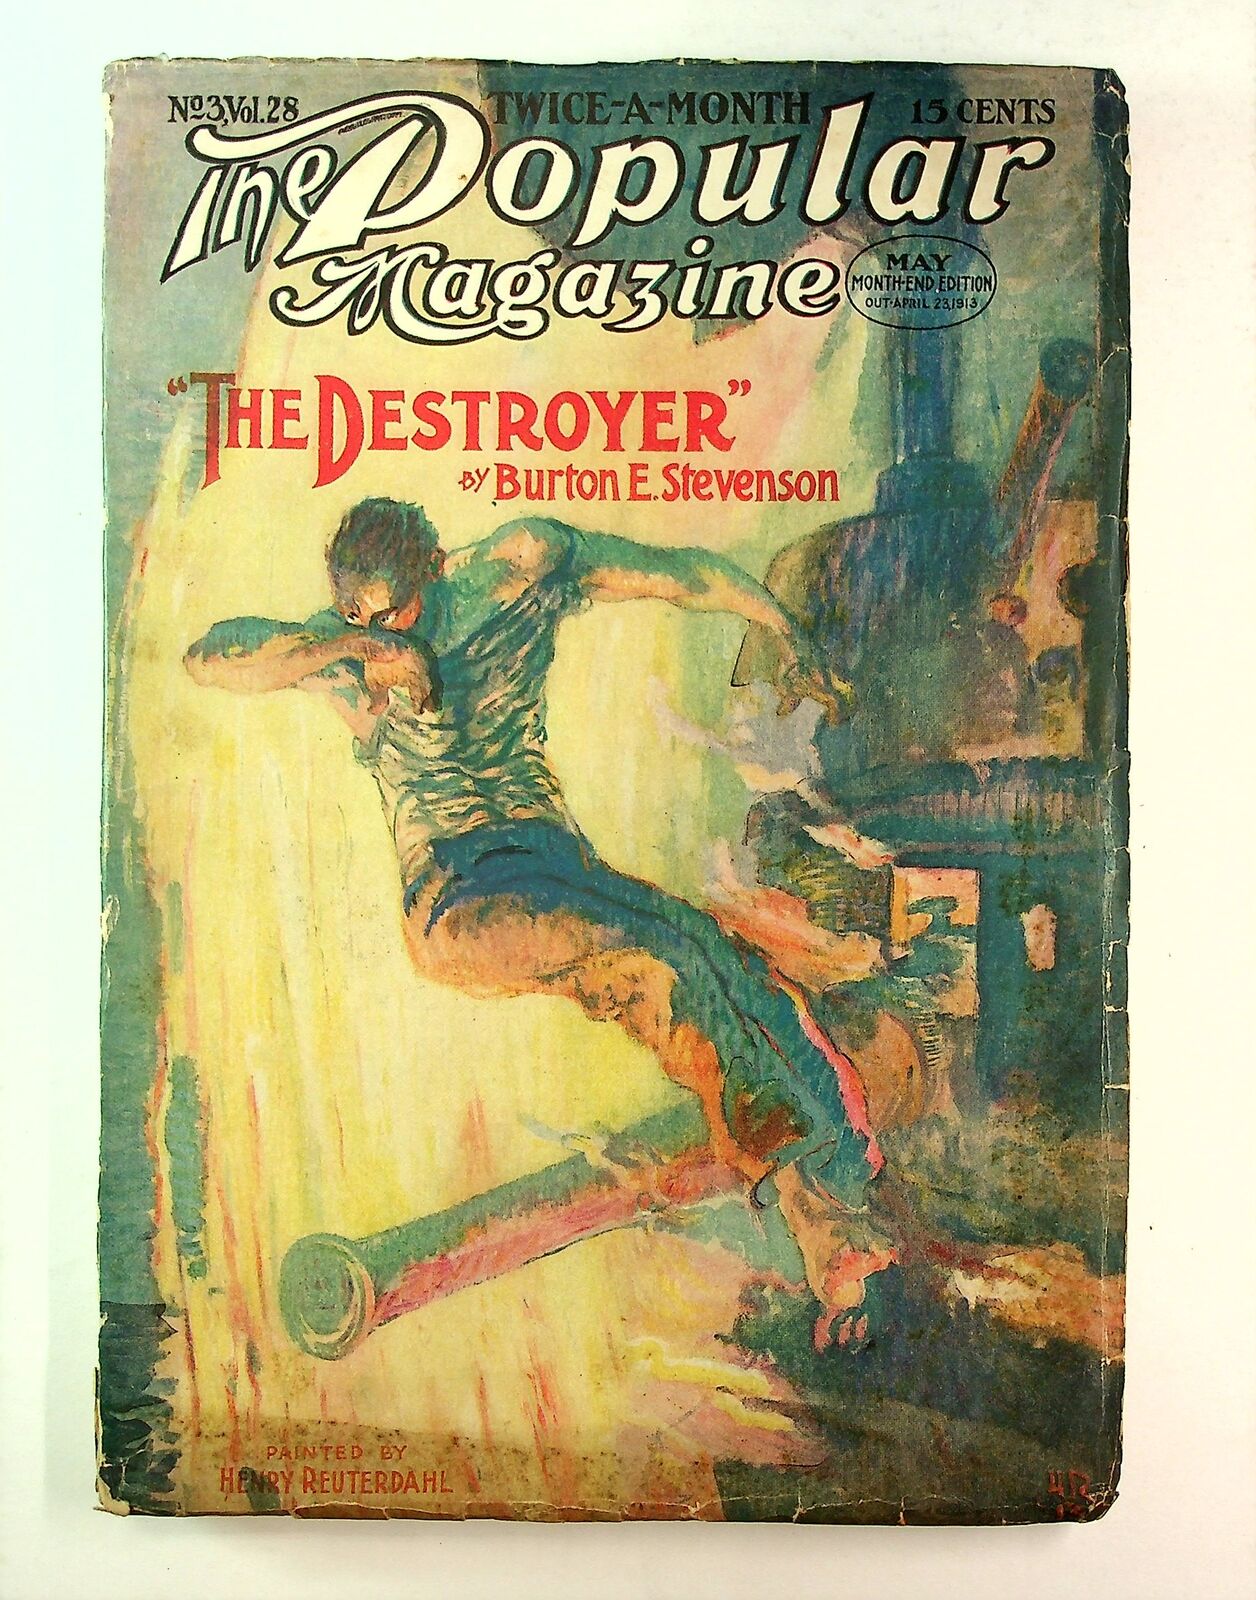 Popular Magazine Pulp May 15 1913 Vol. 28 #3 VG